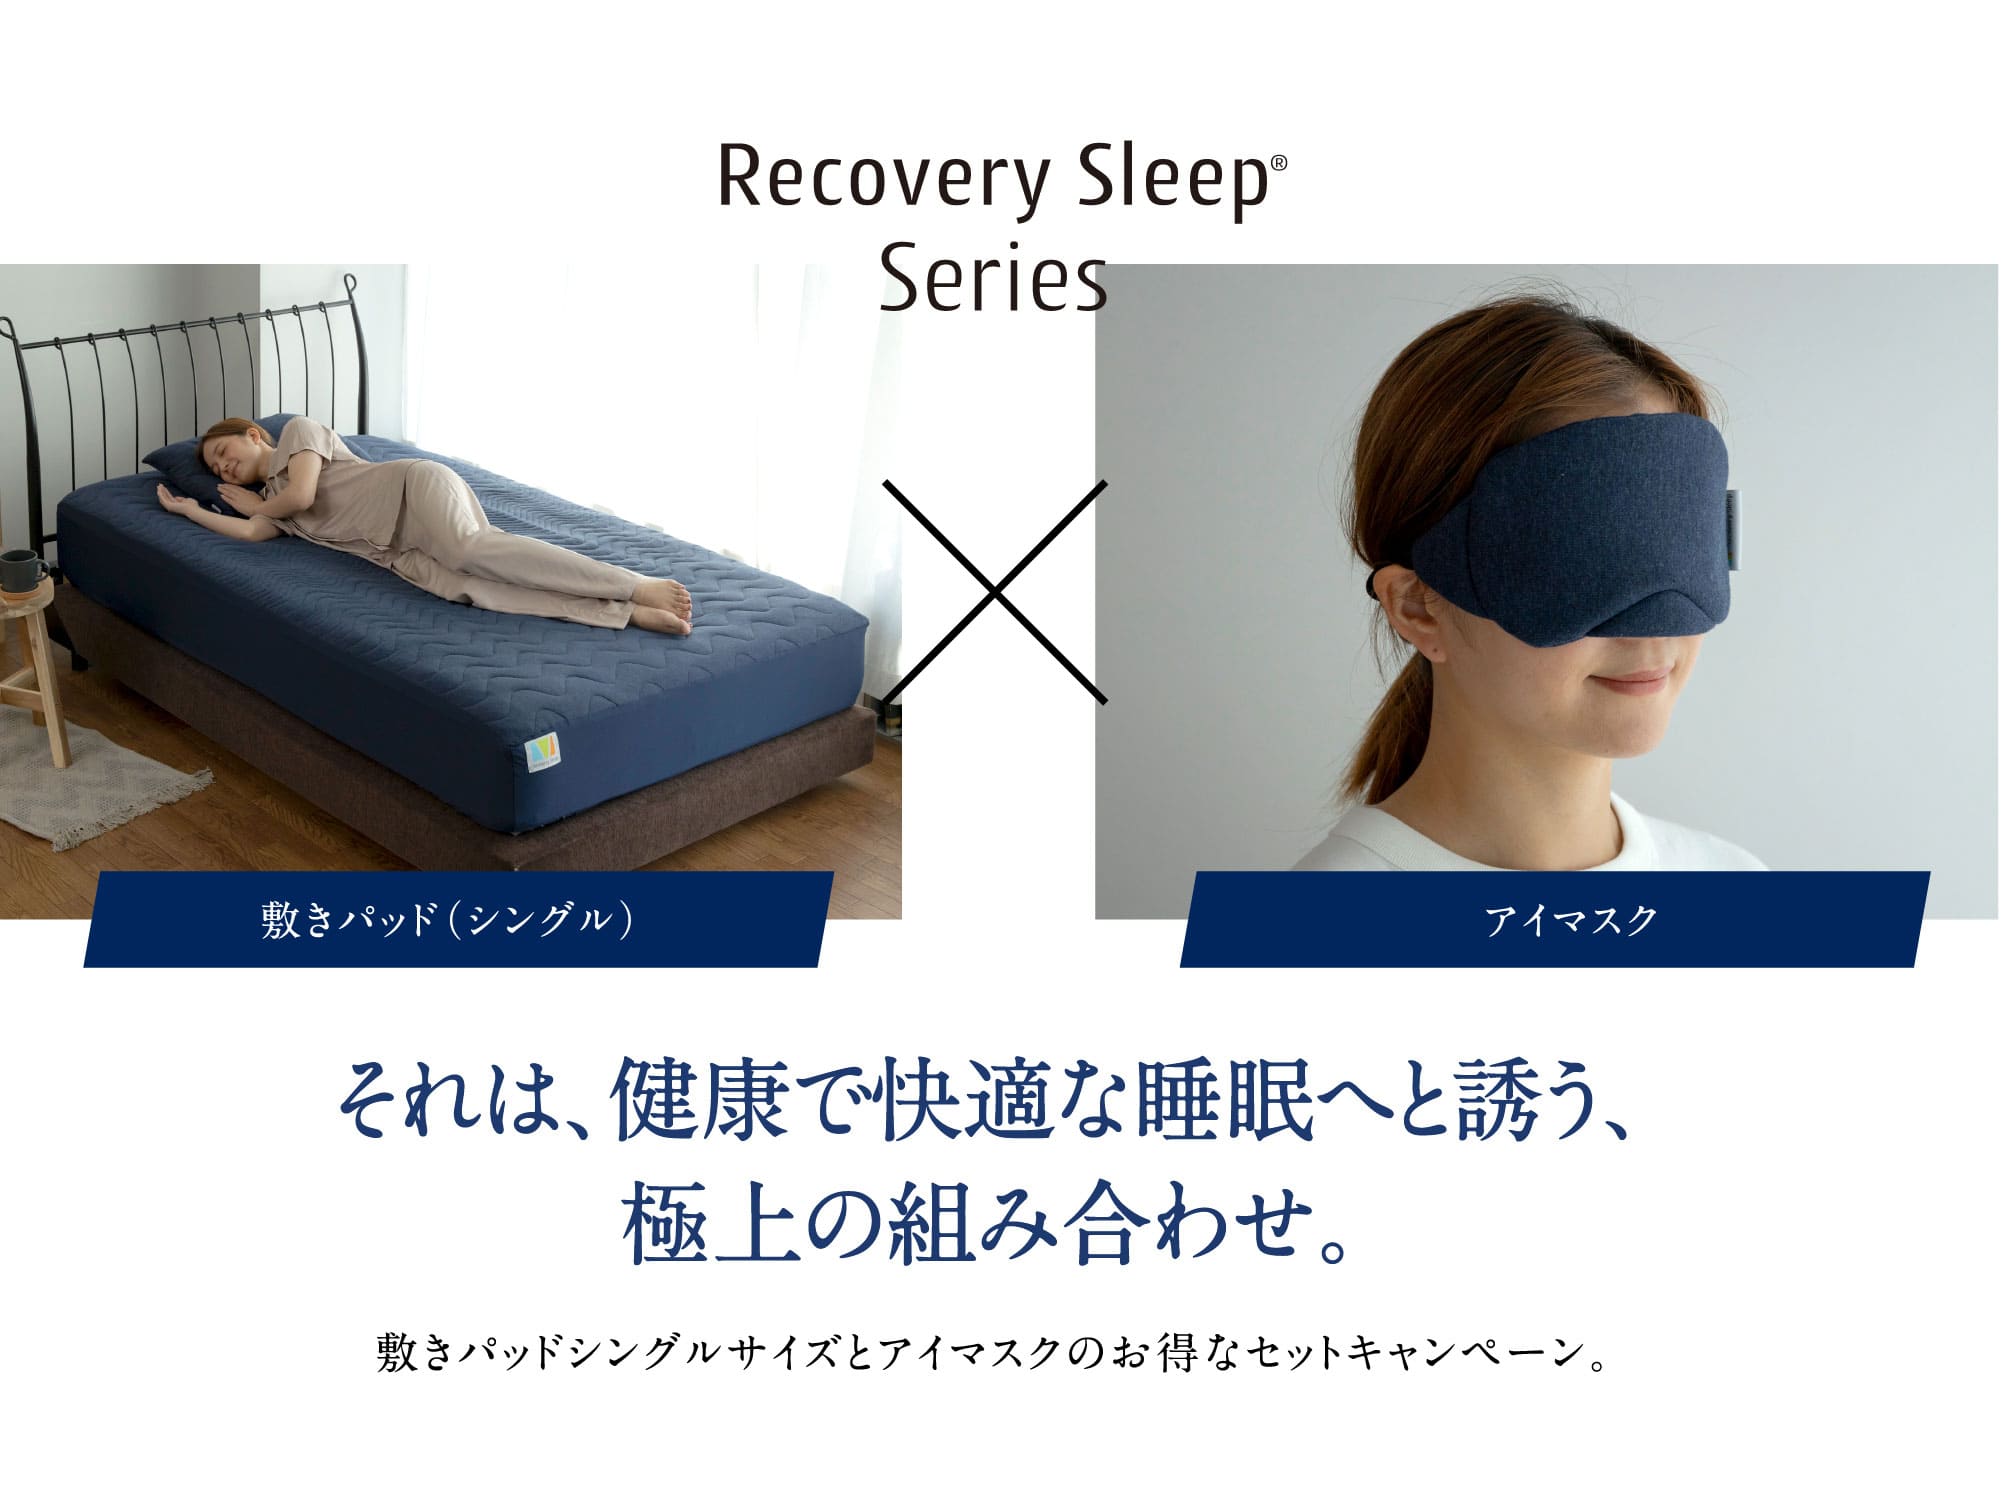 Recovery Sleep Series 敷きパッド（シングル）アイマスク それは、健康で快適な睡眠へと誘う、極上の組み合わせ。一般医療機器敷きパッドシングルサイズとアイマスクのお得なセットキャンペーン。